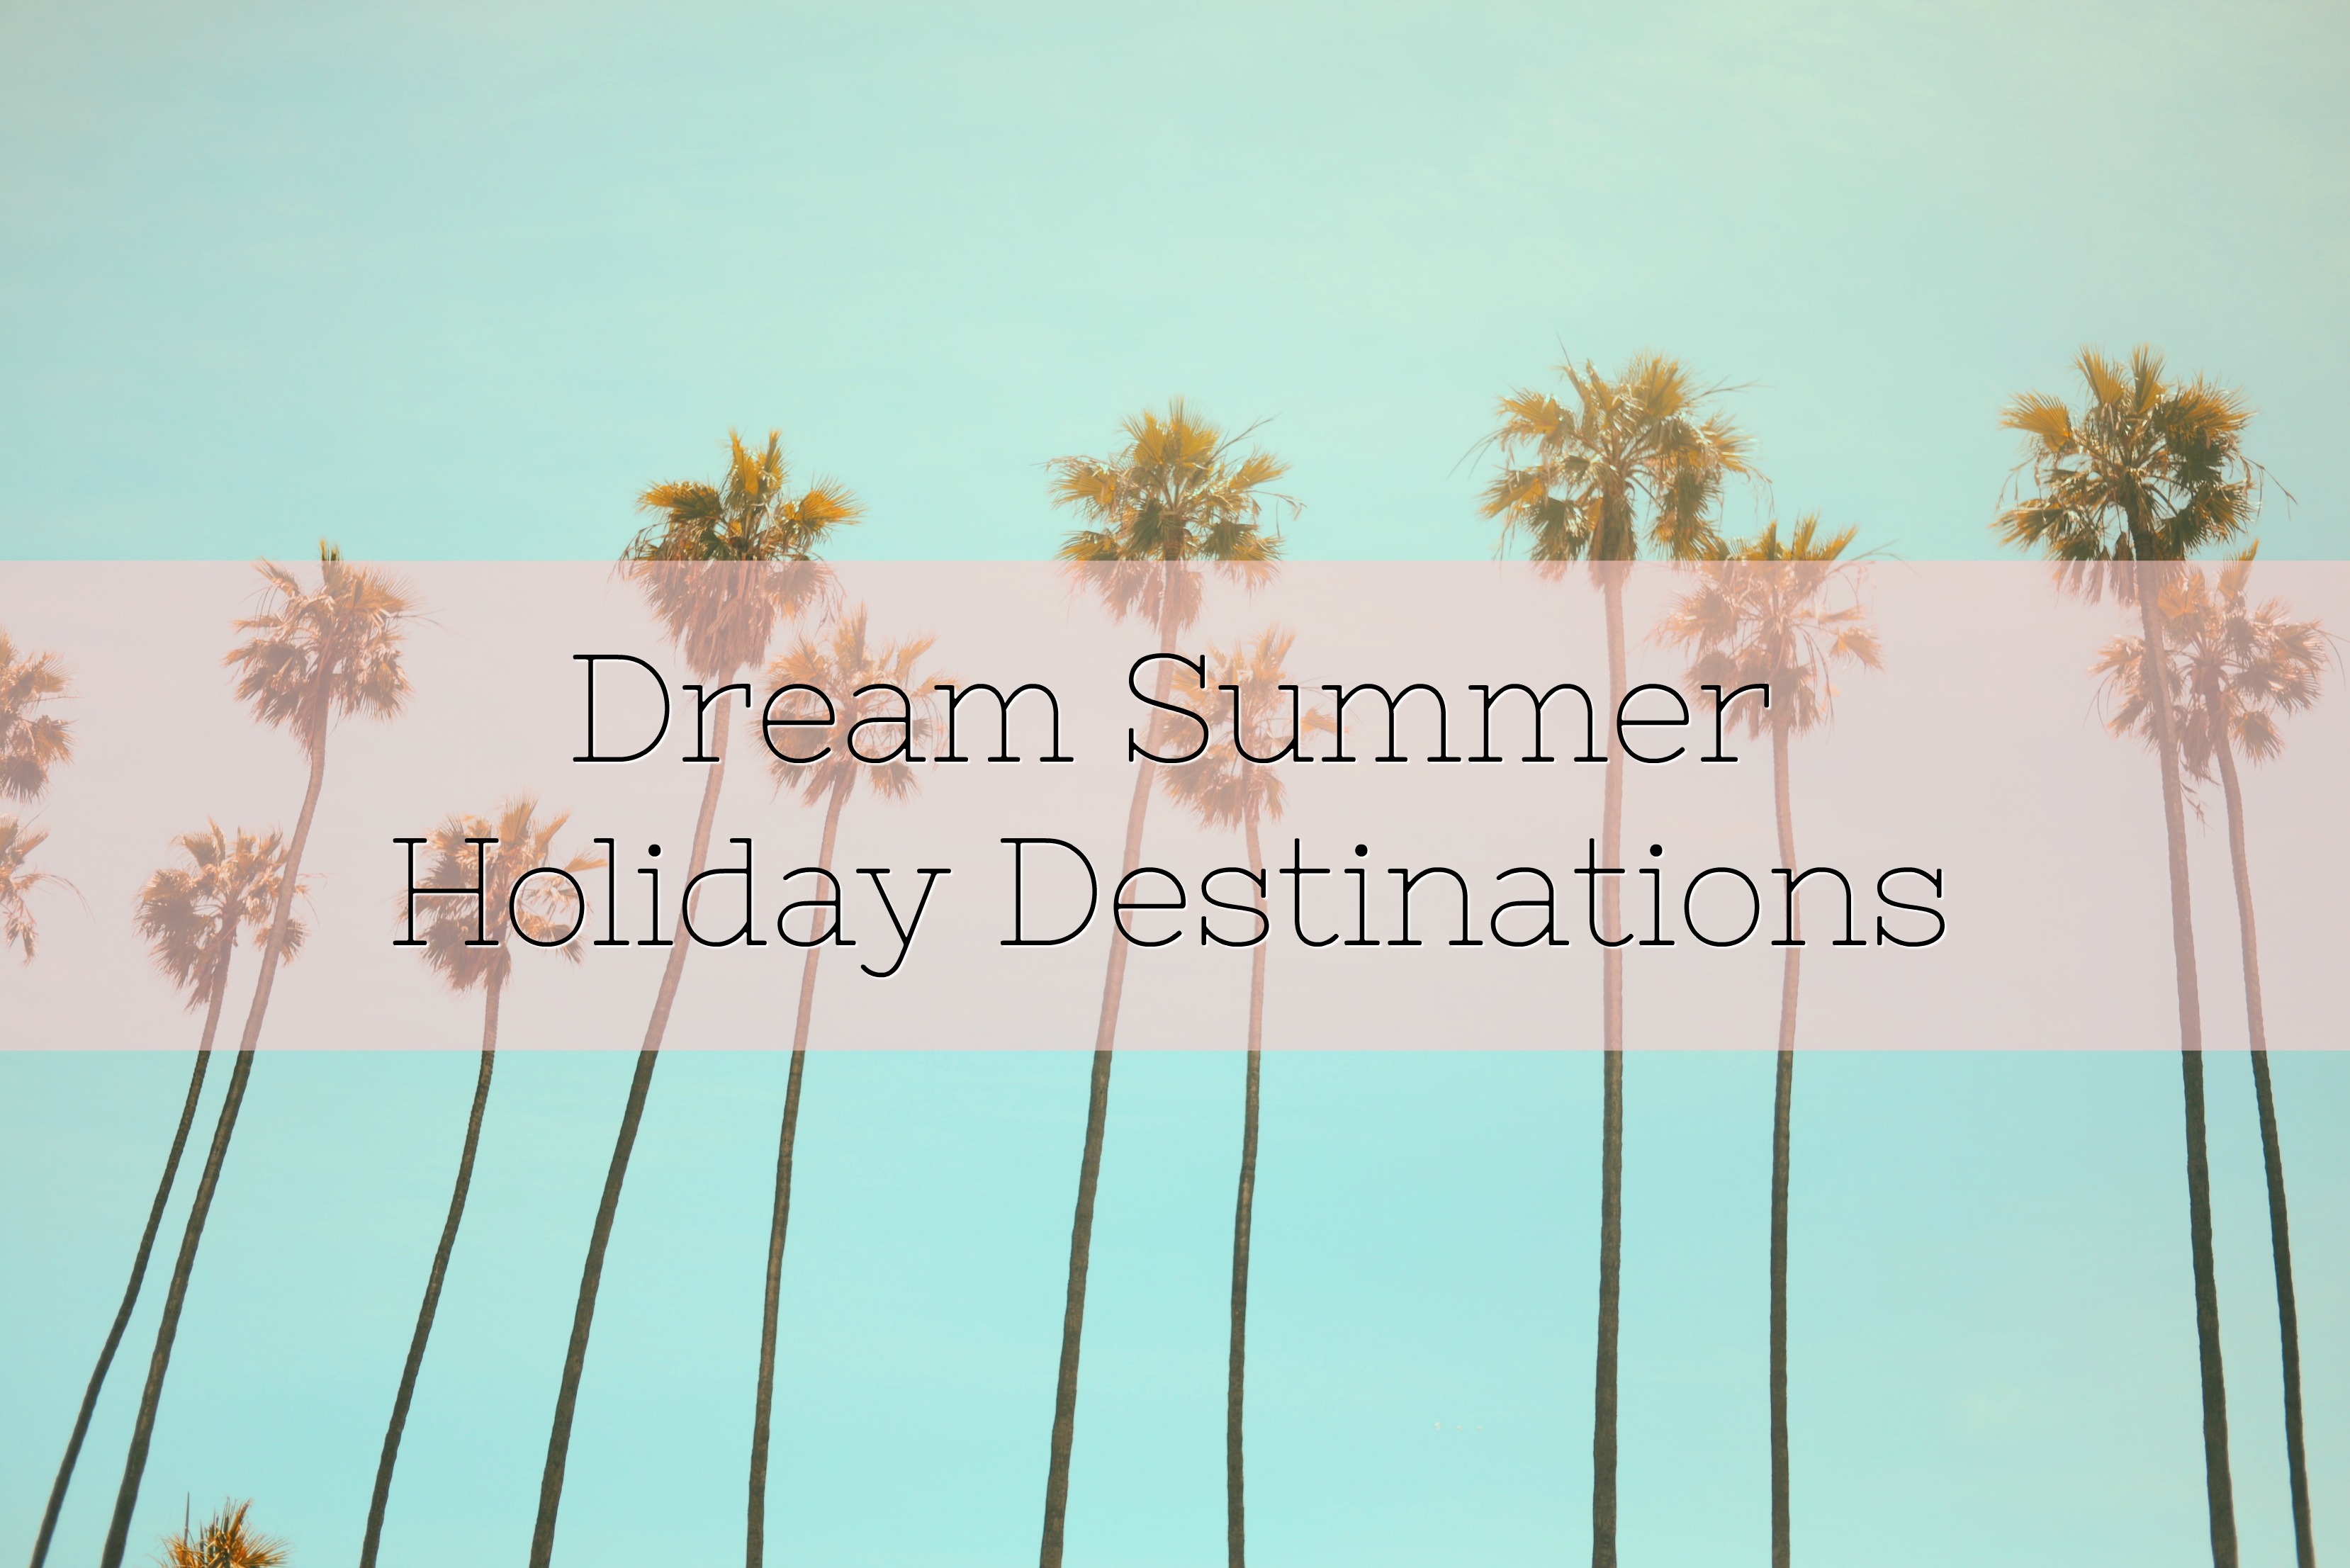 Dream Summer Holiday Destinations title